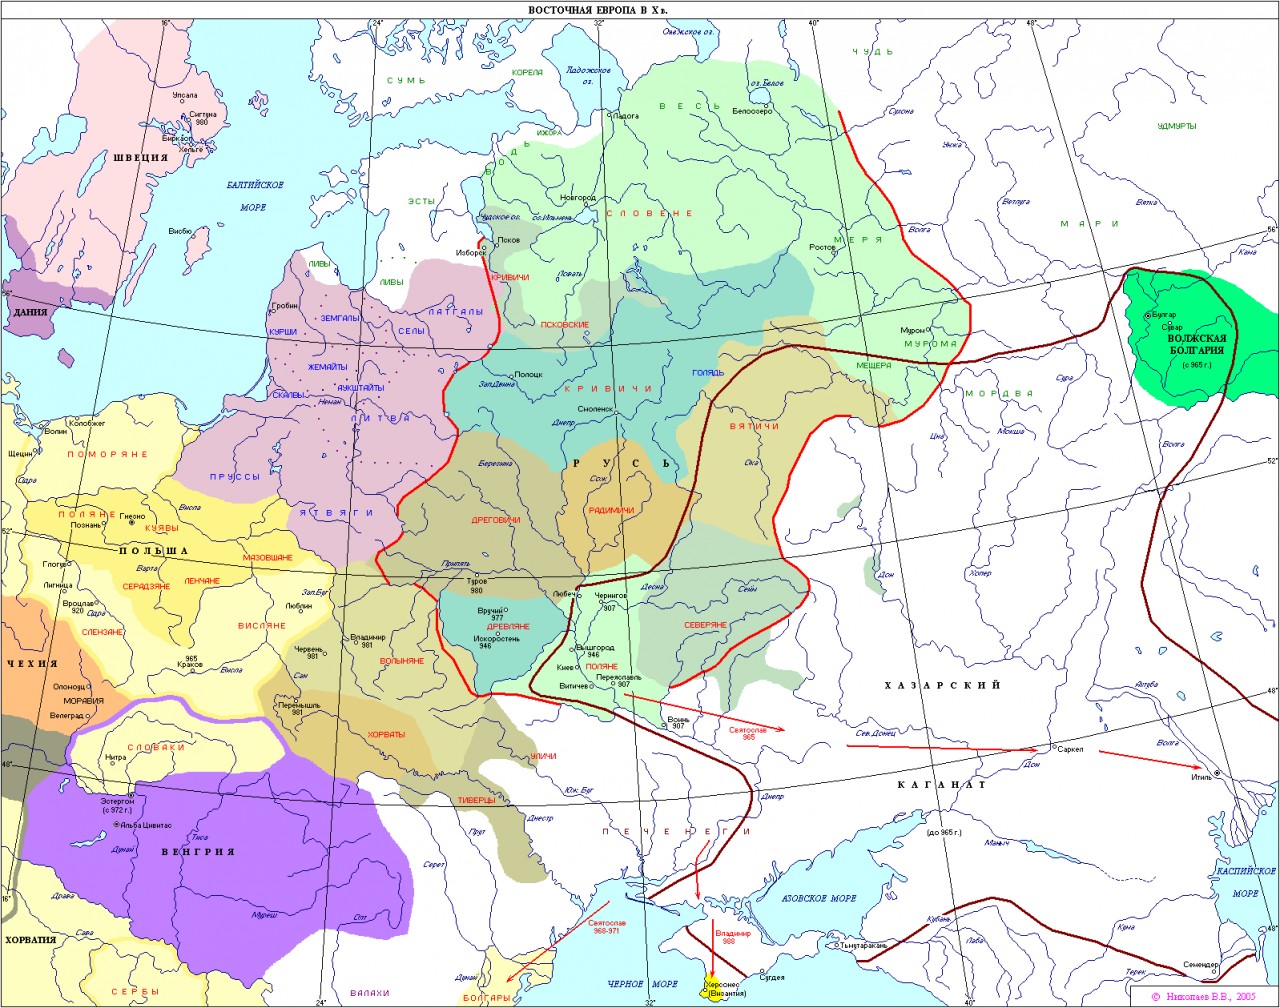 http://www.sunapse.ru/rushistory/Books/box_files/Map/04_map_max.gif